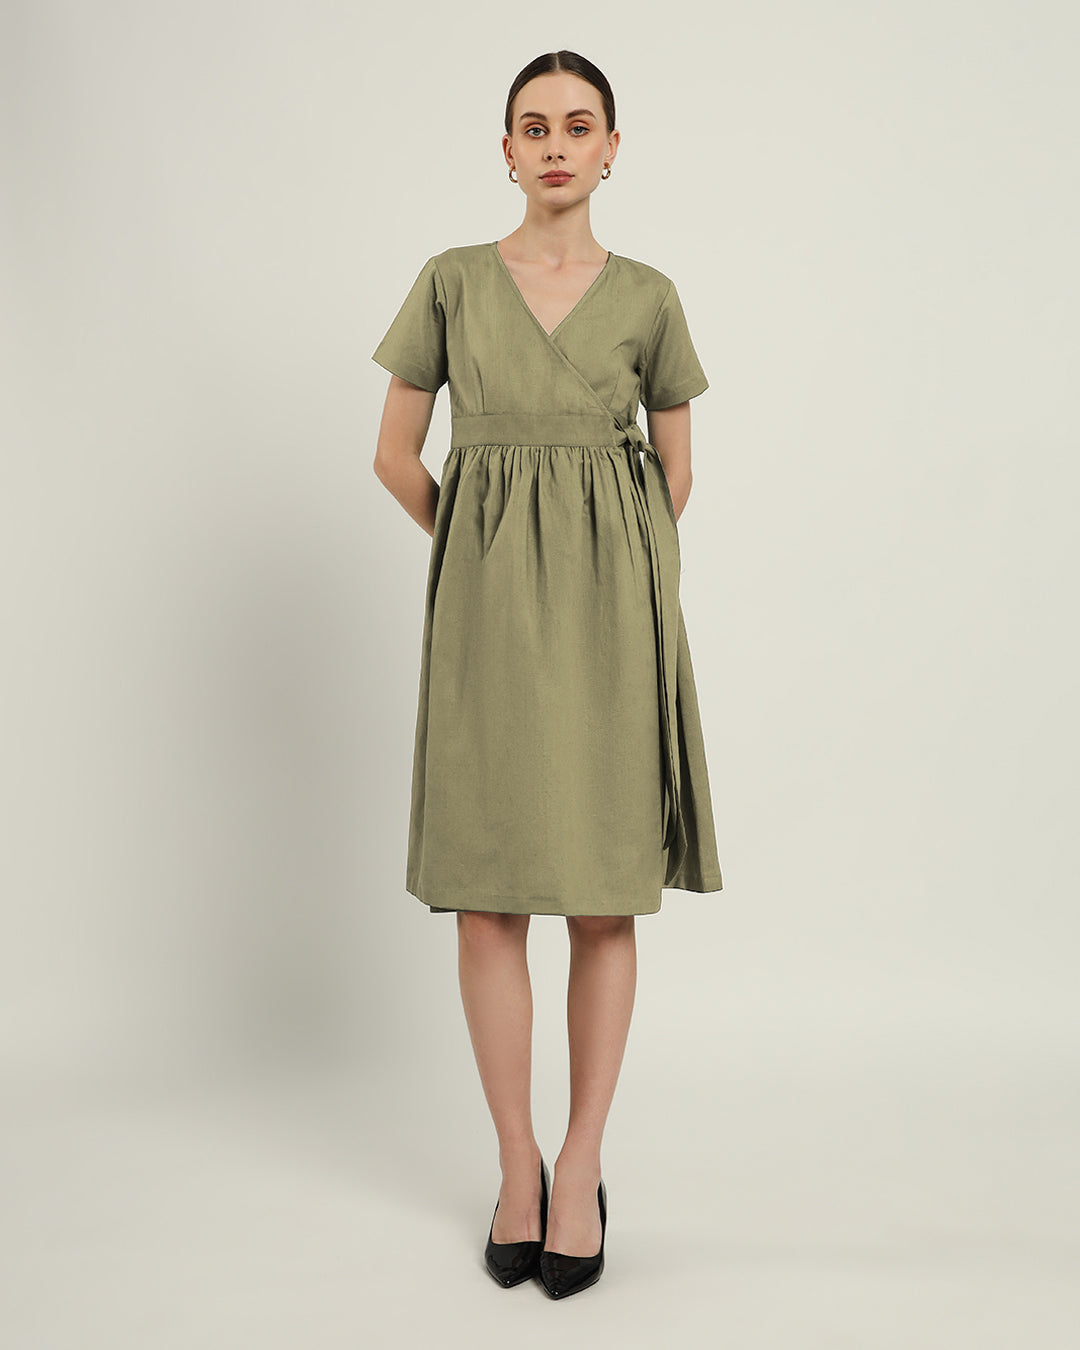 The Miyoshi Daisy Olive Linen Dress